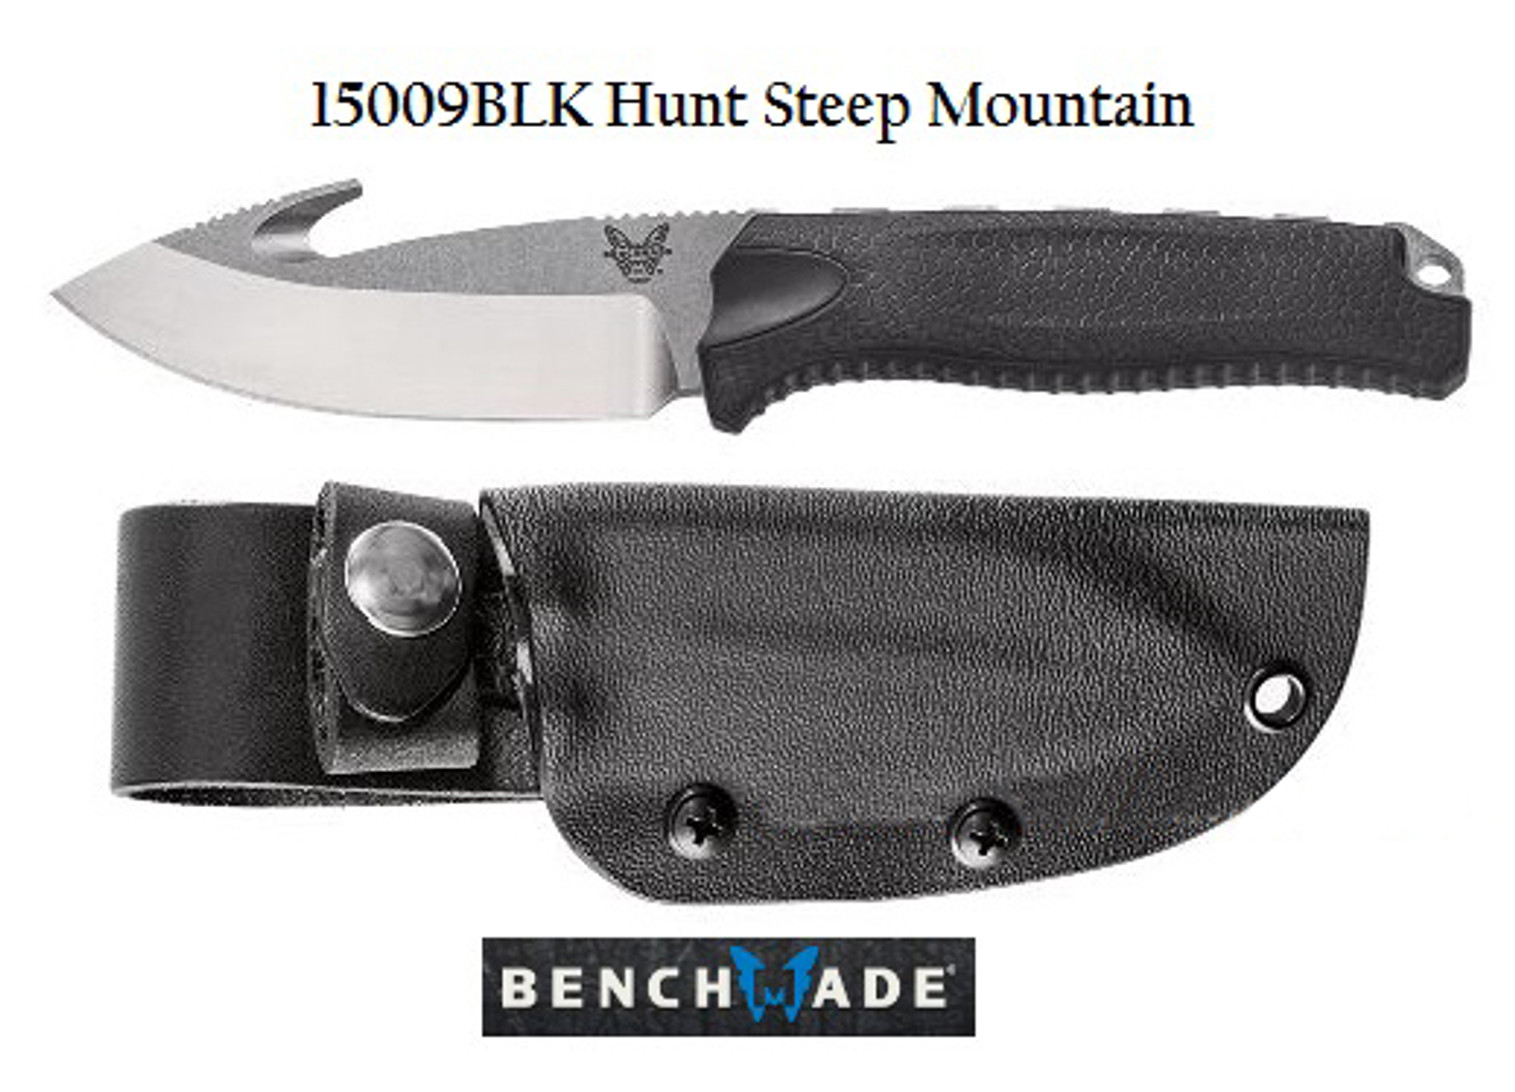 Benchmade Hunt Steep Mountain w/ Hook - Black Handle 15009